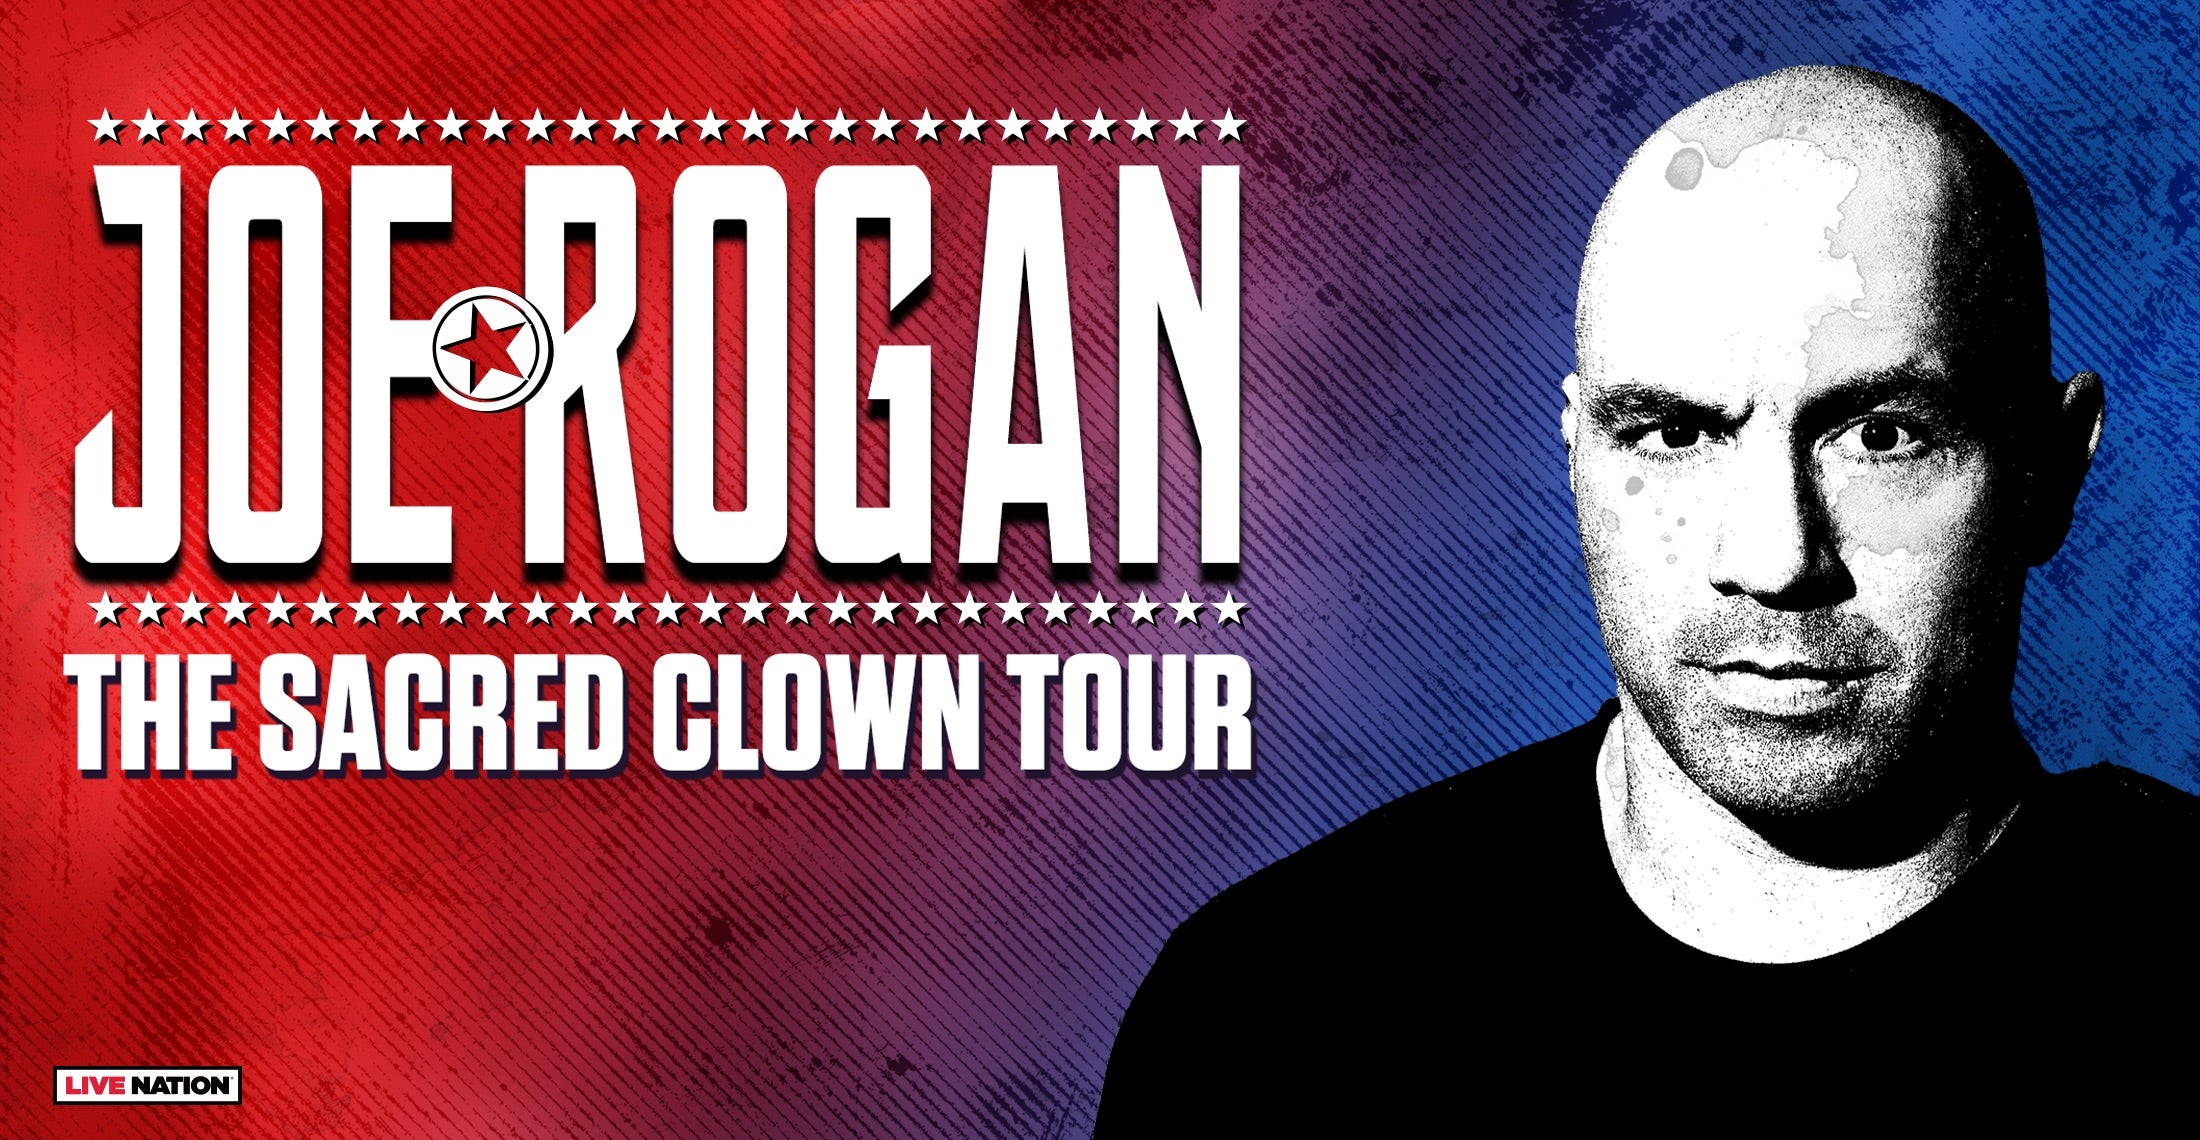 Joe Rogan: The Sacred Clown Tour